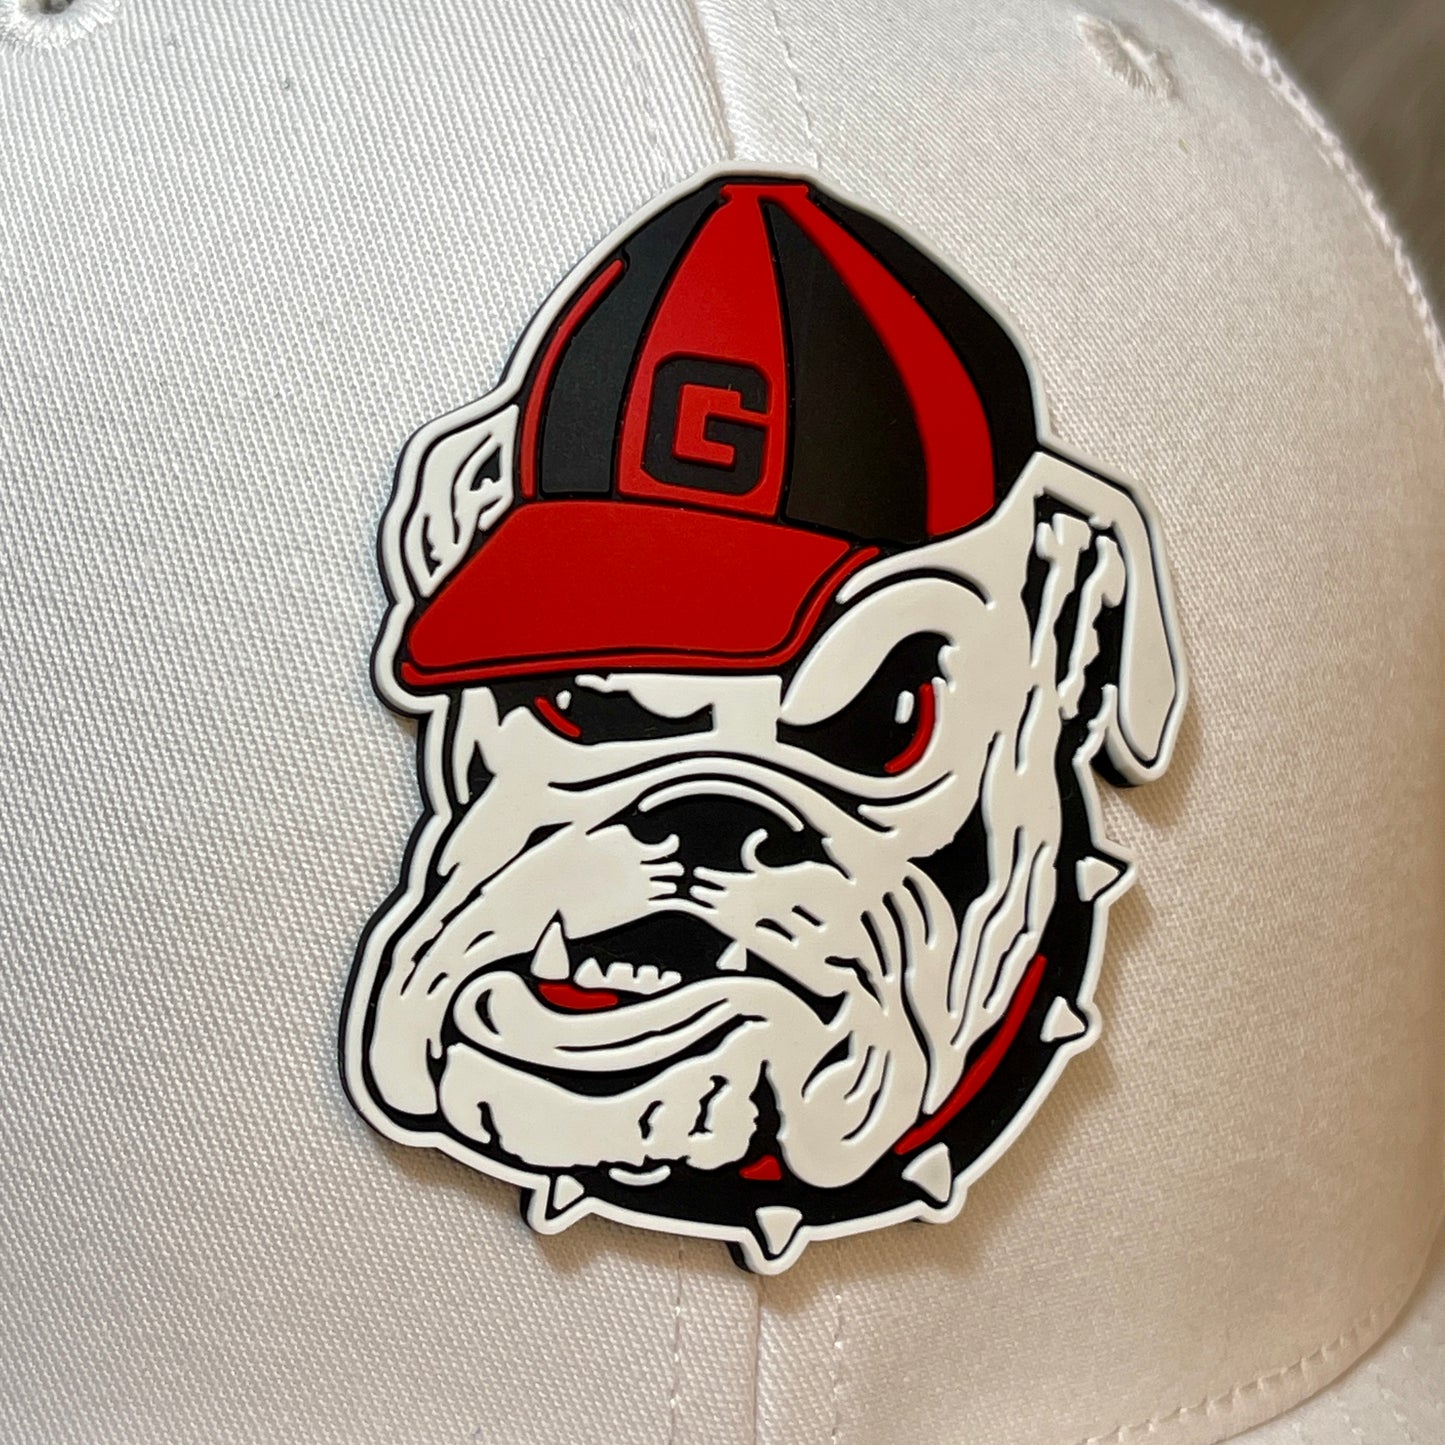 Georgia Bulldogs Vintage 3D Logo Patterned Snapback Trucker Hat- Red Digital Camo - Ten Gallon Hat Co.